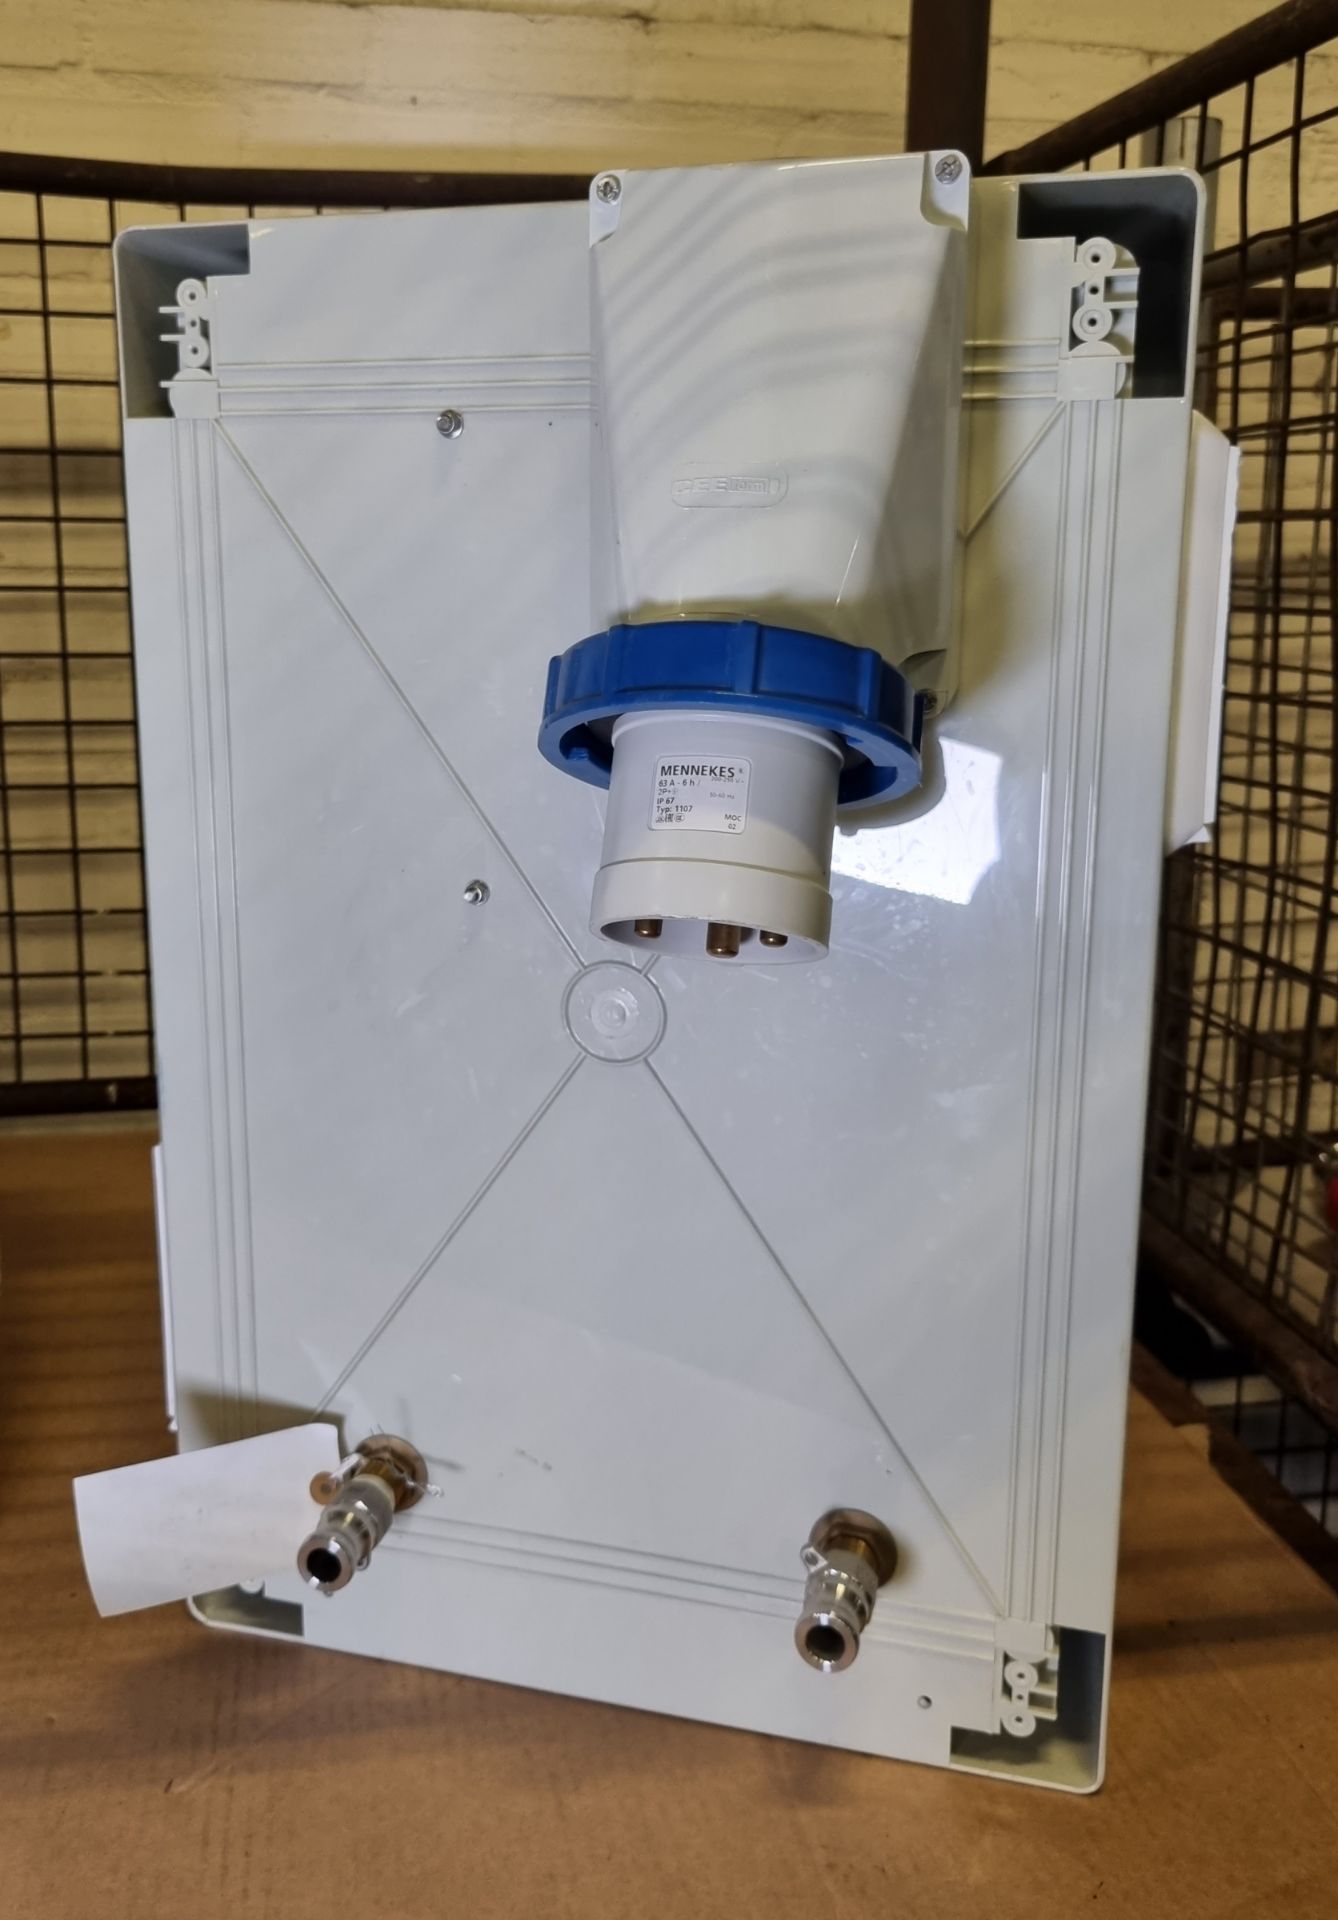 Triton T70 gsi shower unit in protective casing - 230V - 8.5Kw - L 43 x W 35 x H 60cm - Image 3 of 5